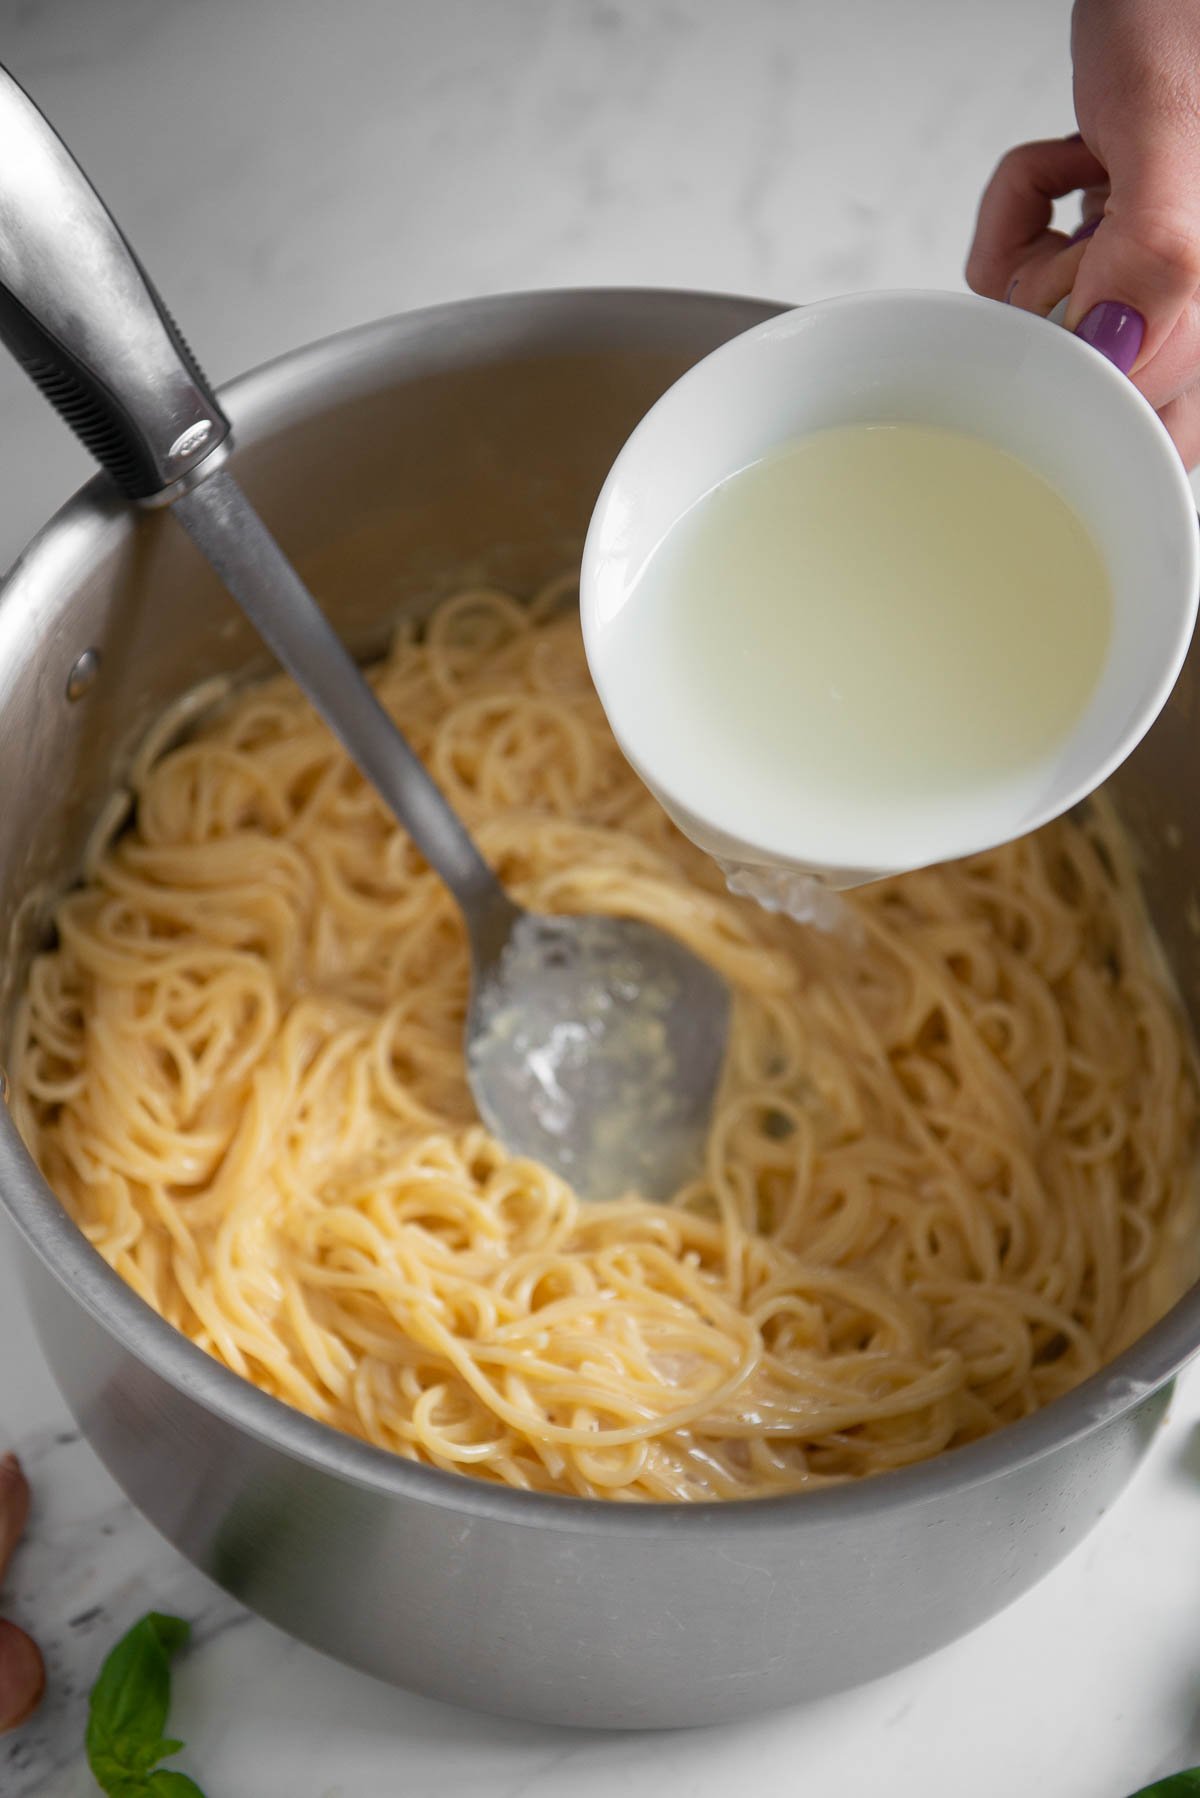 adding salted pasta water to carbonara pasta to thin sauce.